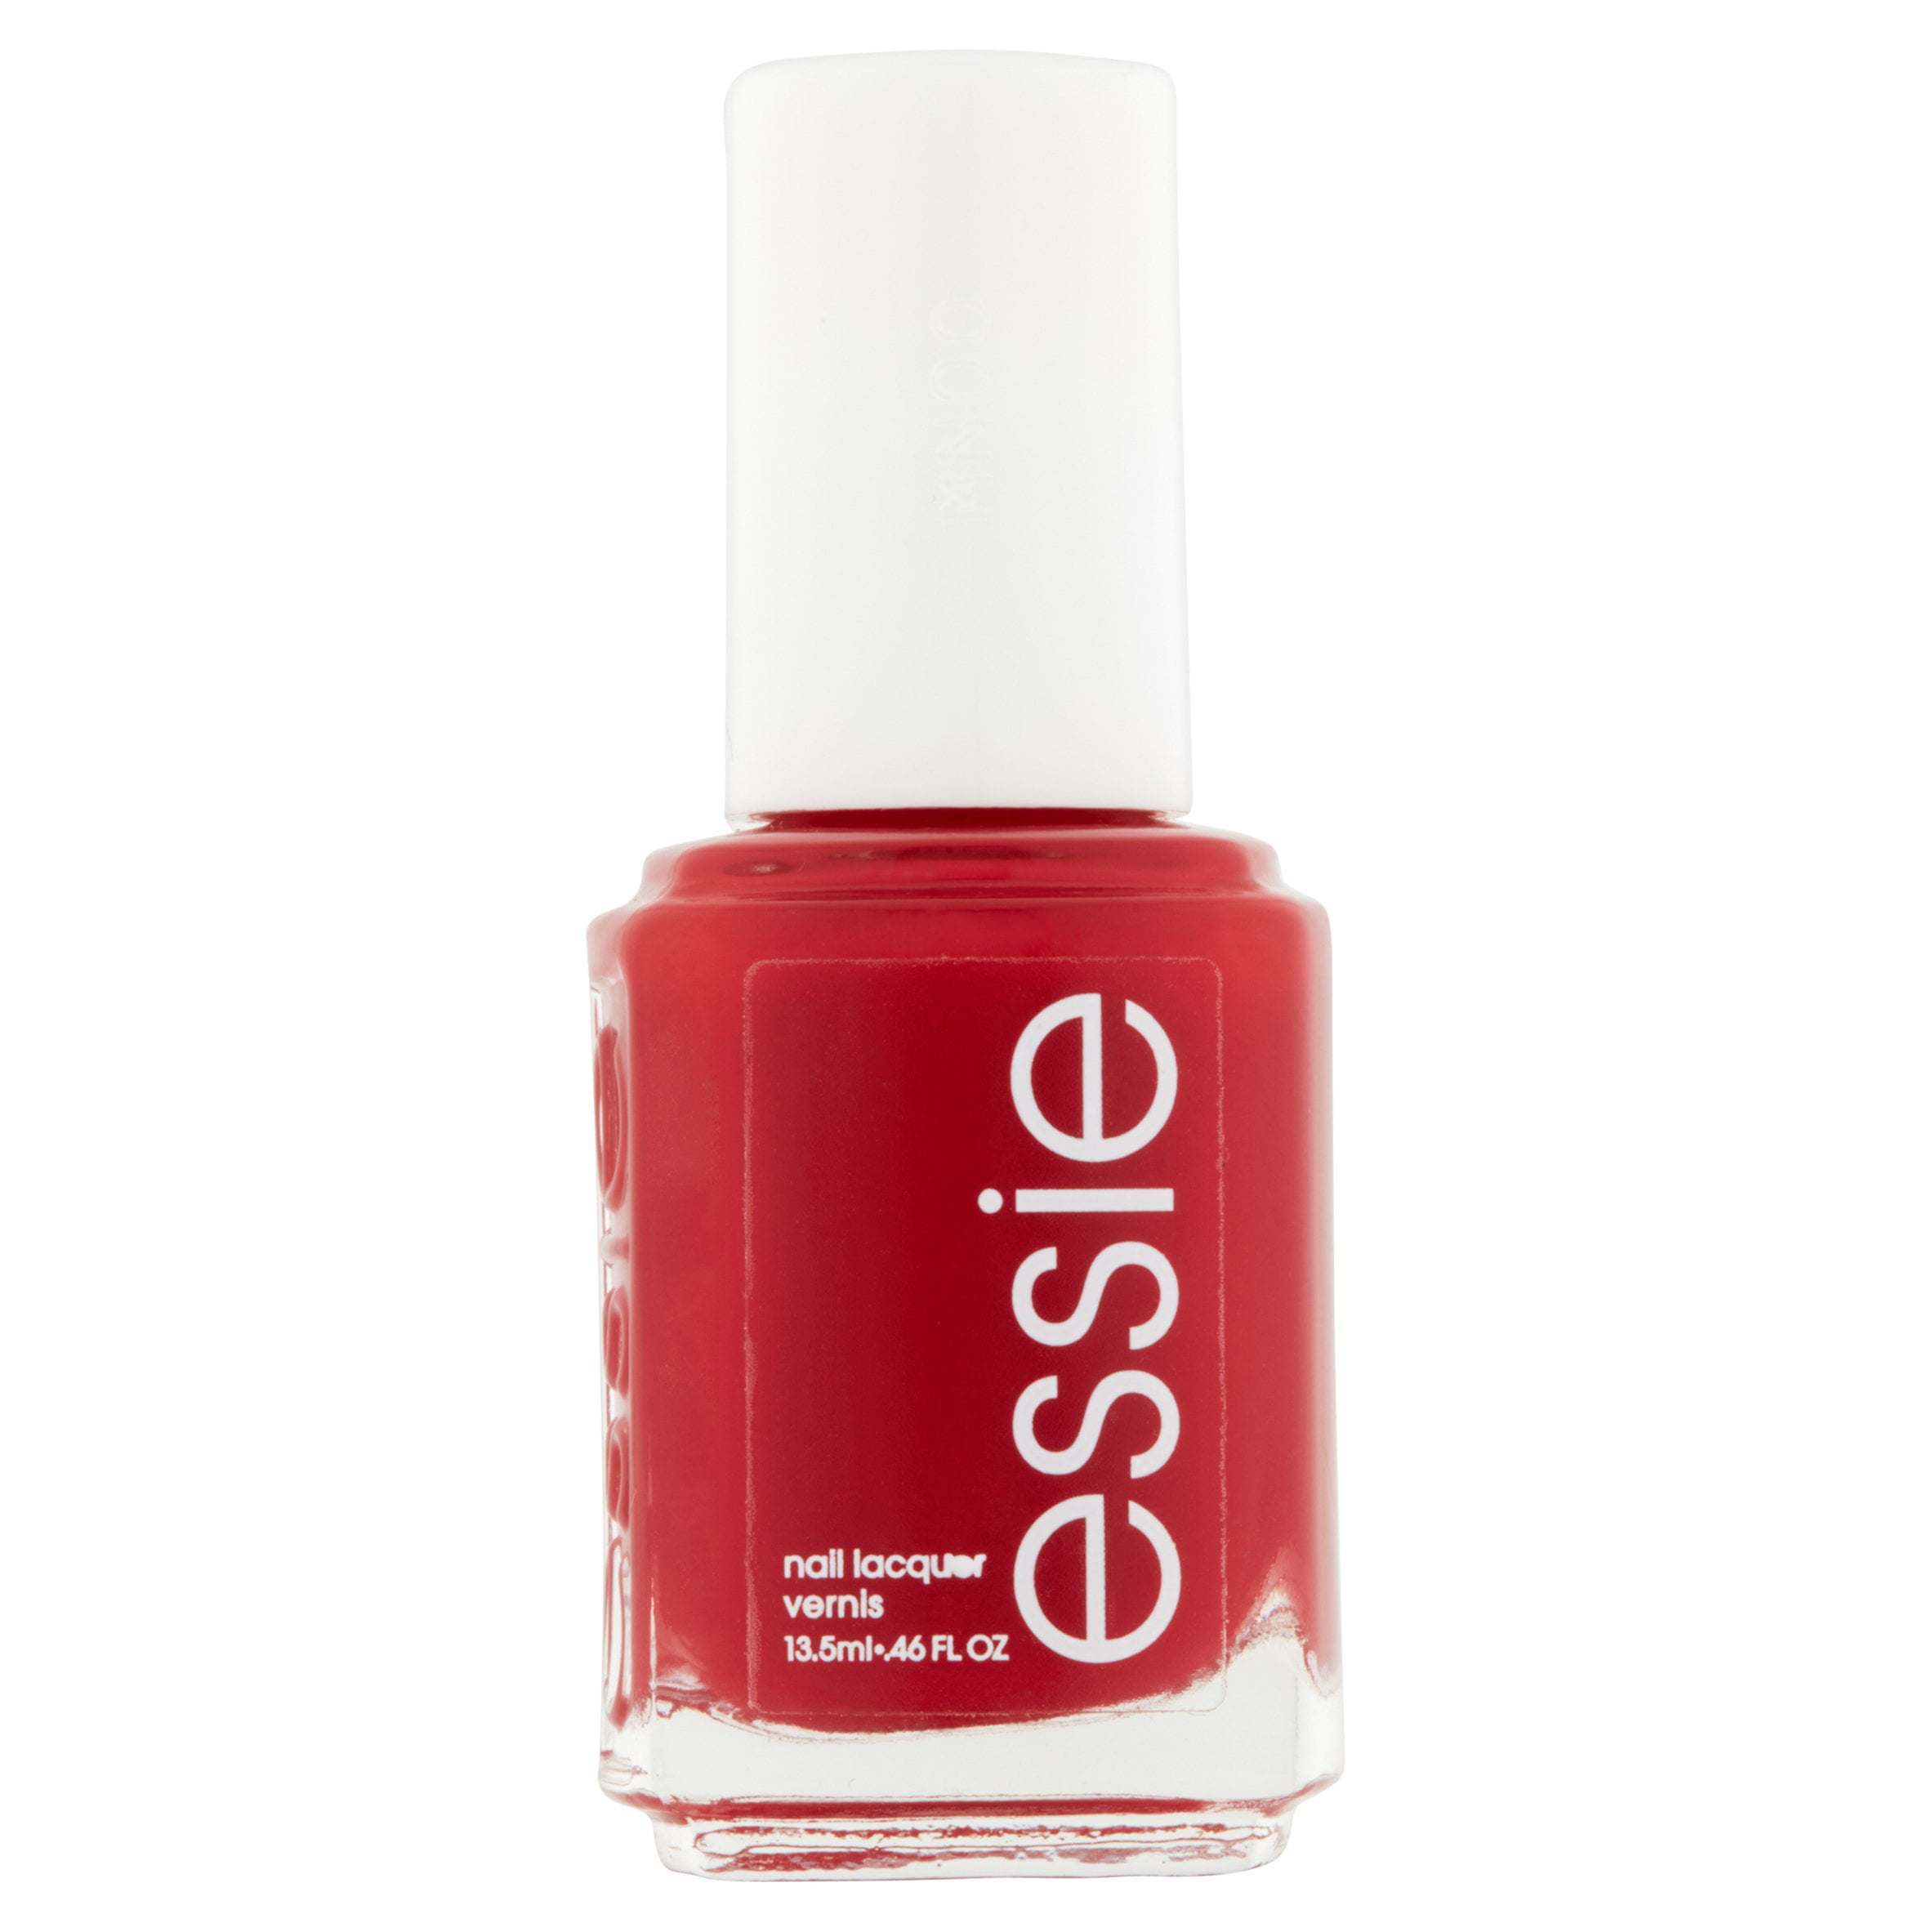 essie Nail Polish (Reds), Really Red, 0.46 fl oz - Walmart.com ...